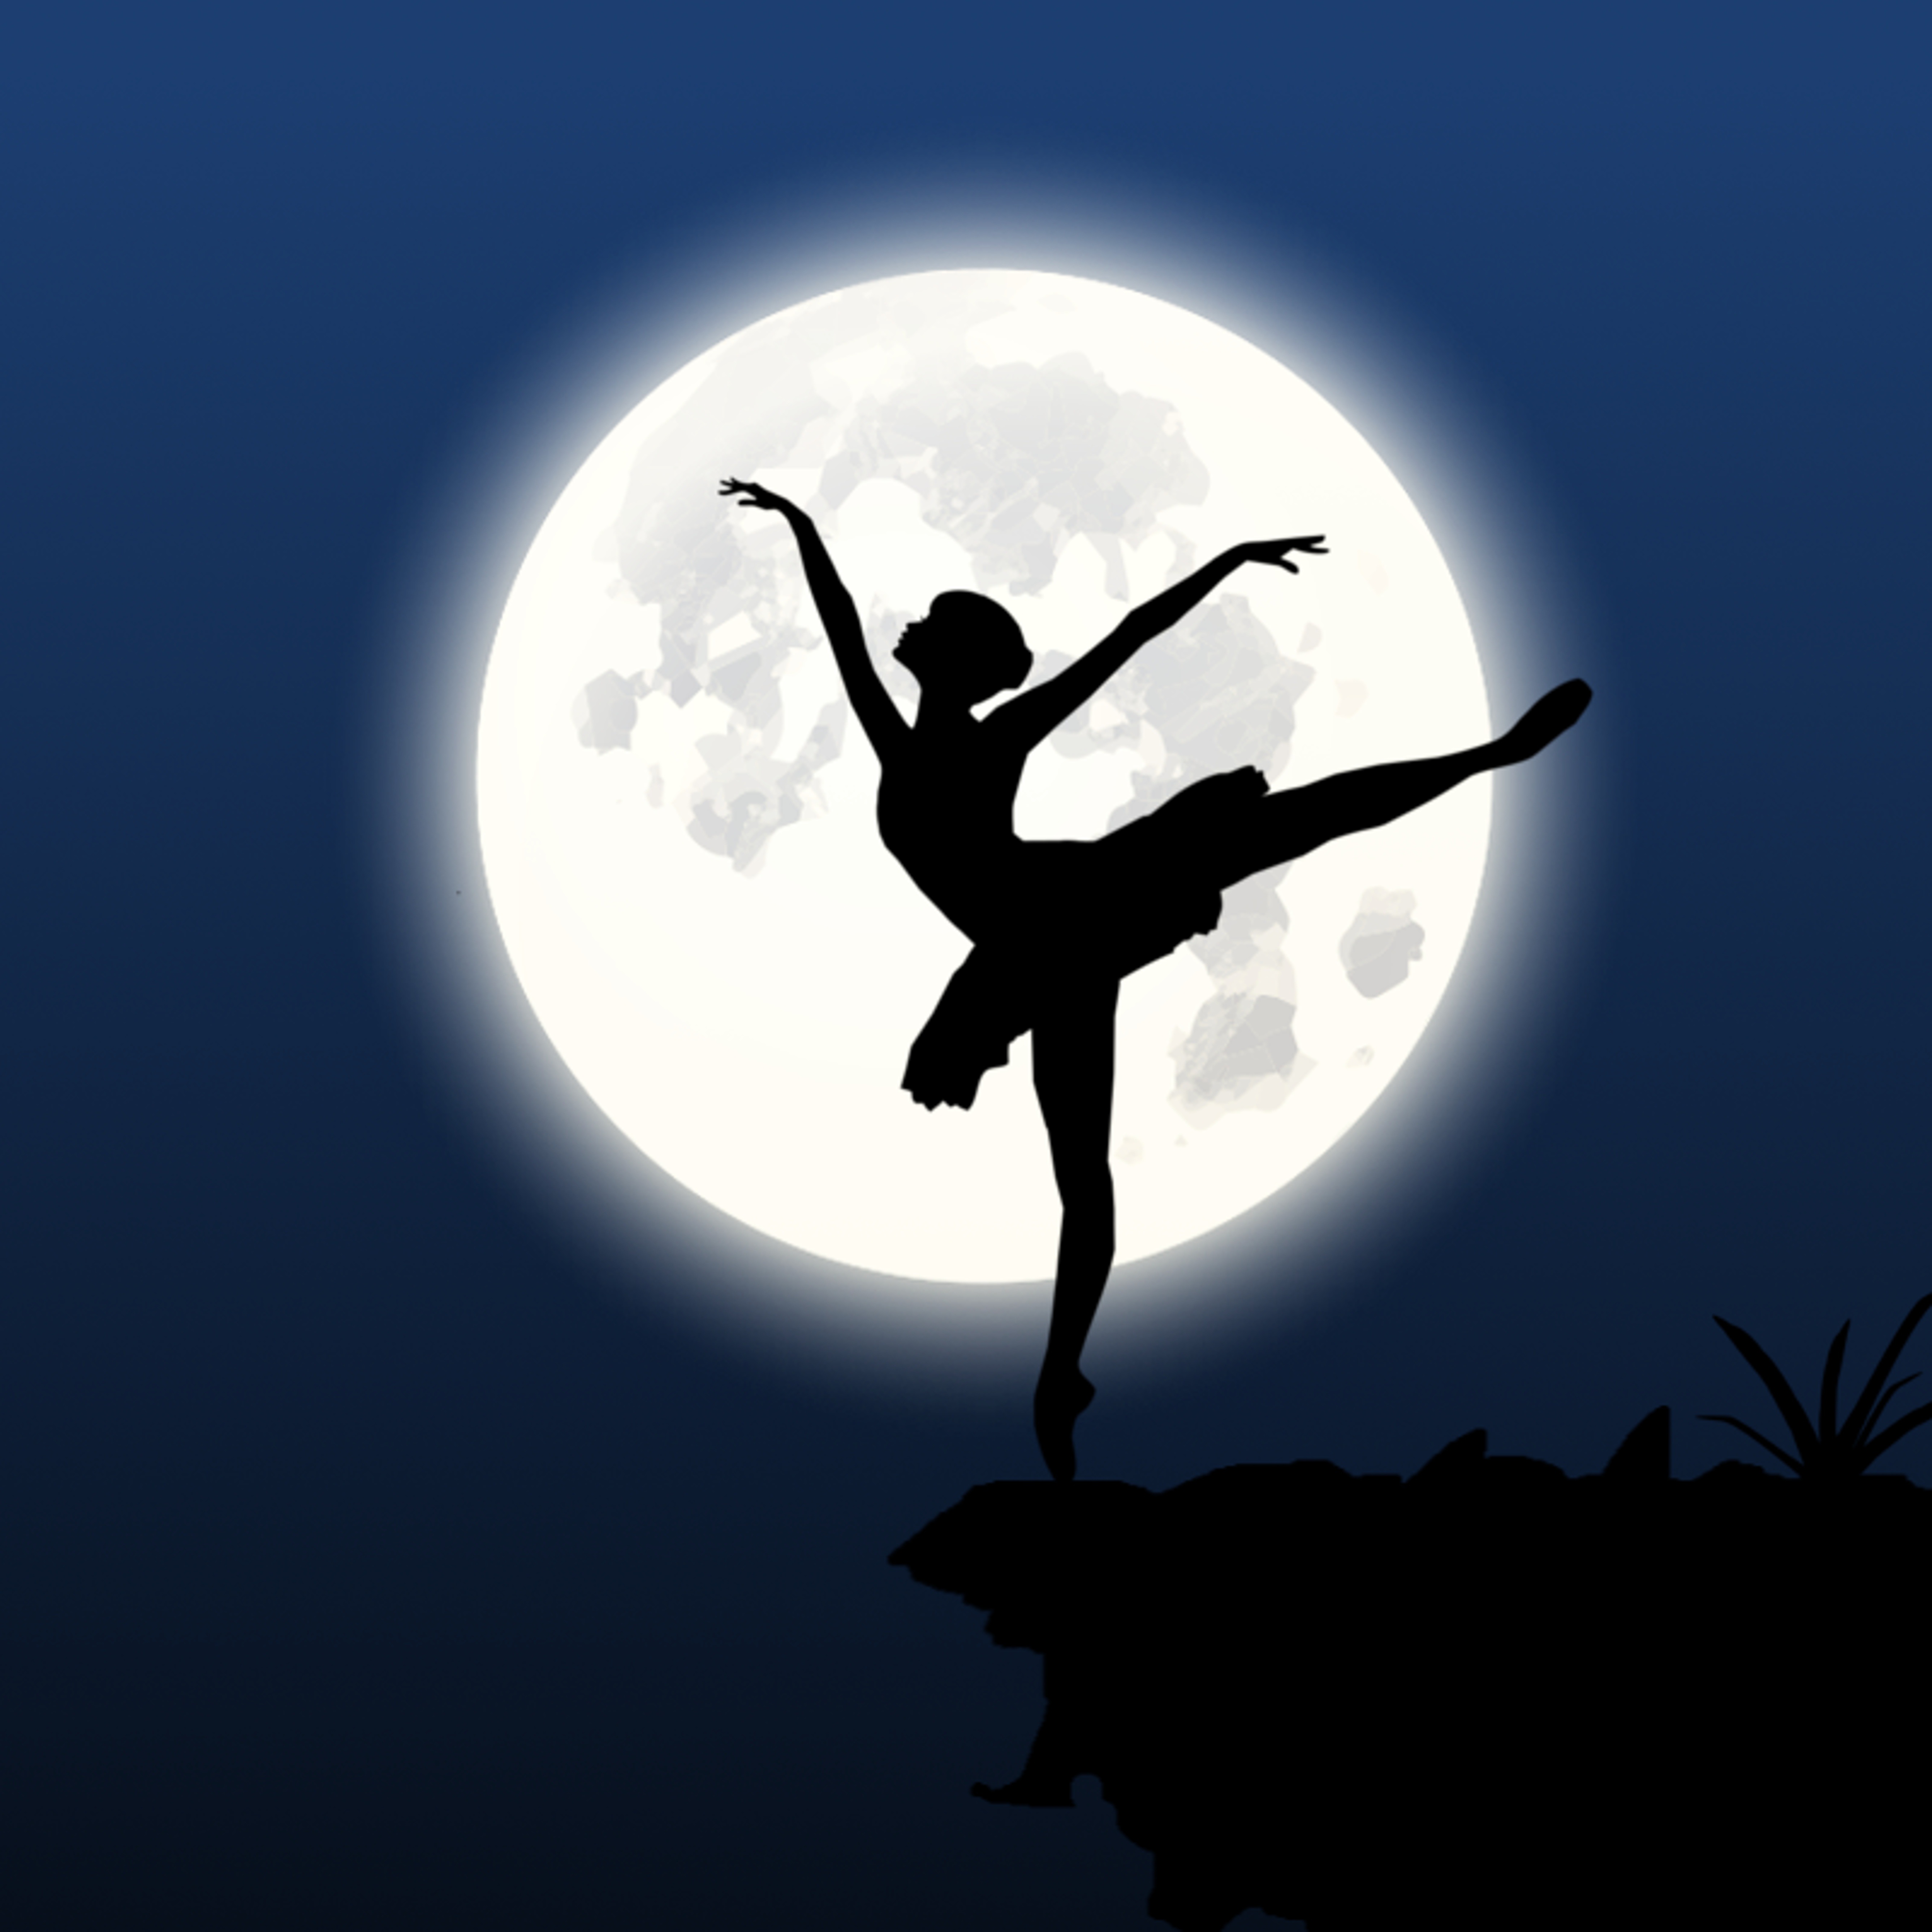 miscellaneous, moon, miscellanea, dance, silhouette, ballerina 2160p